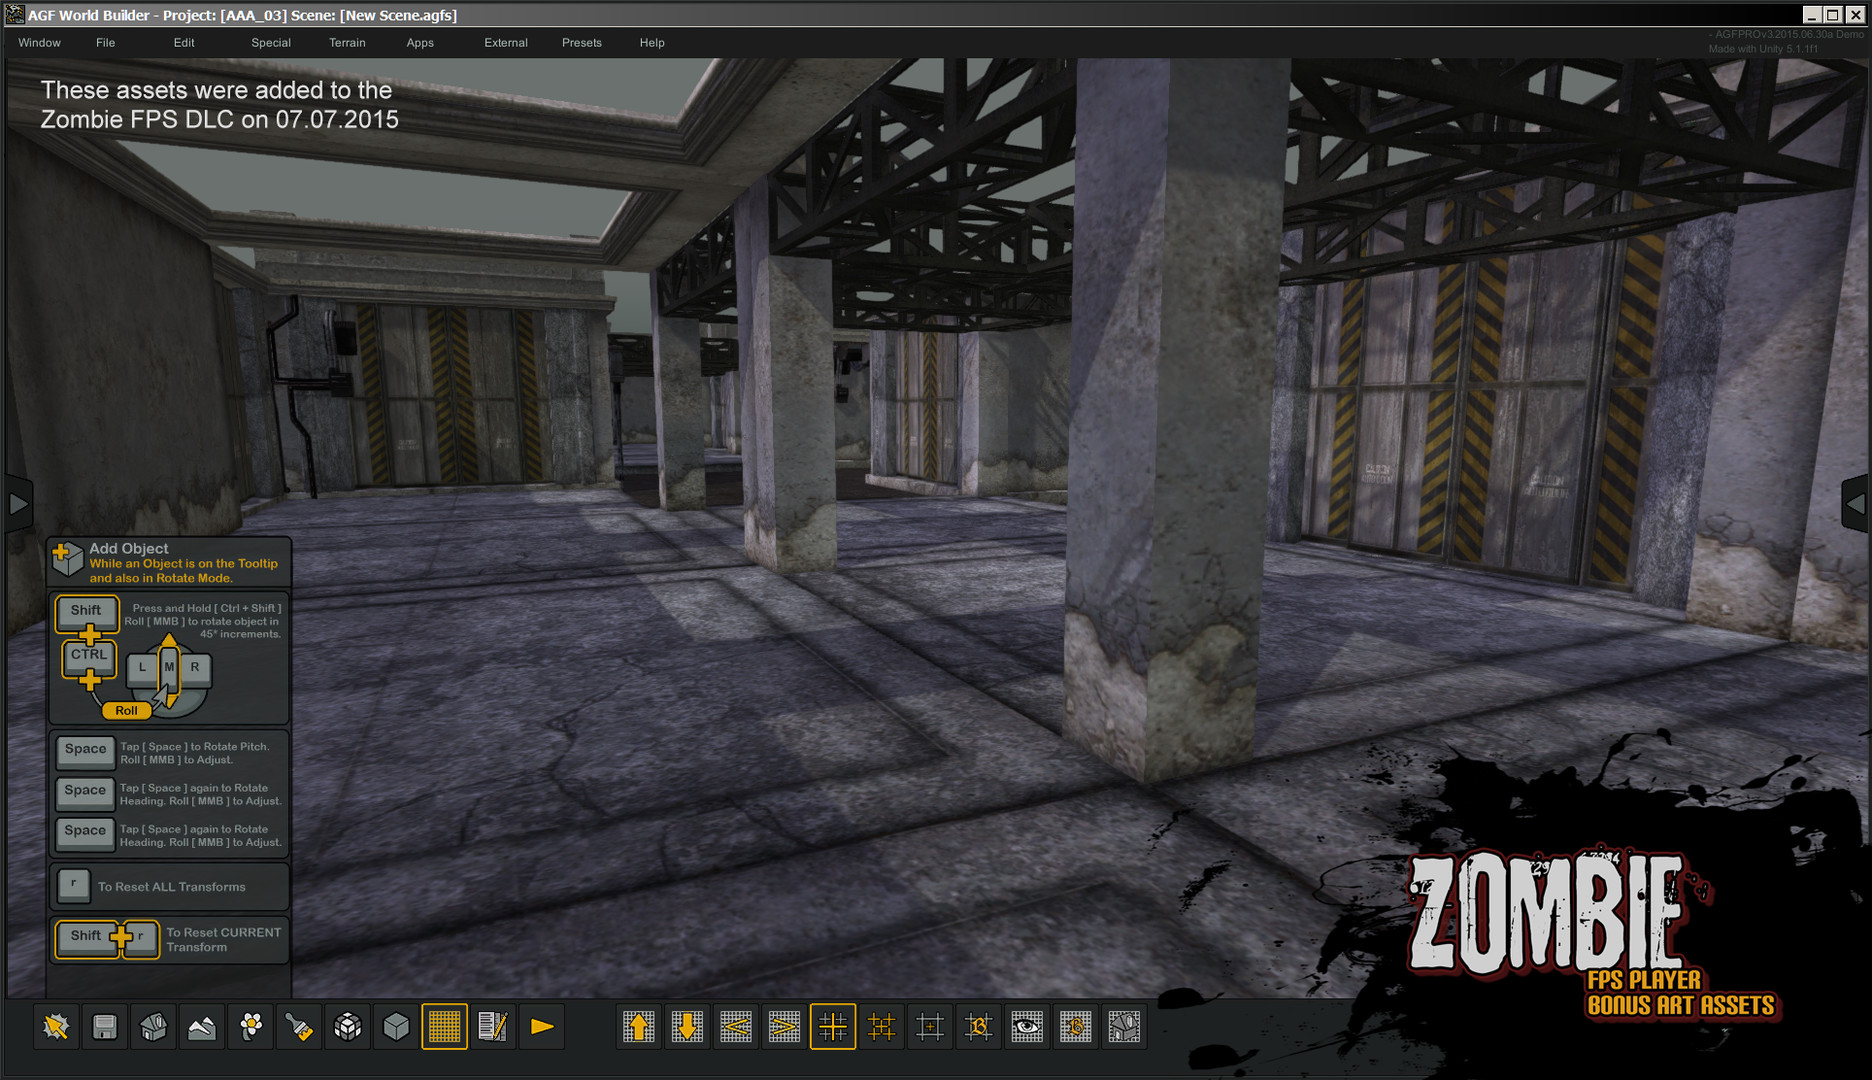 Gmod Zombie Survival works great on Deck! : r/SteamDeck